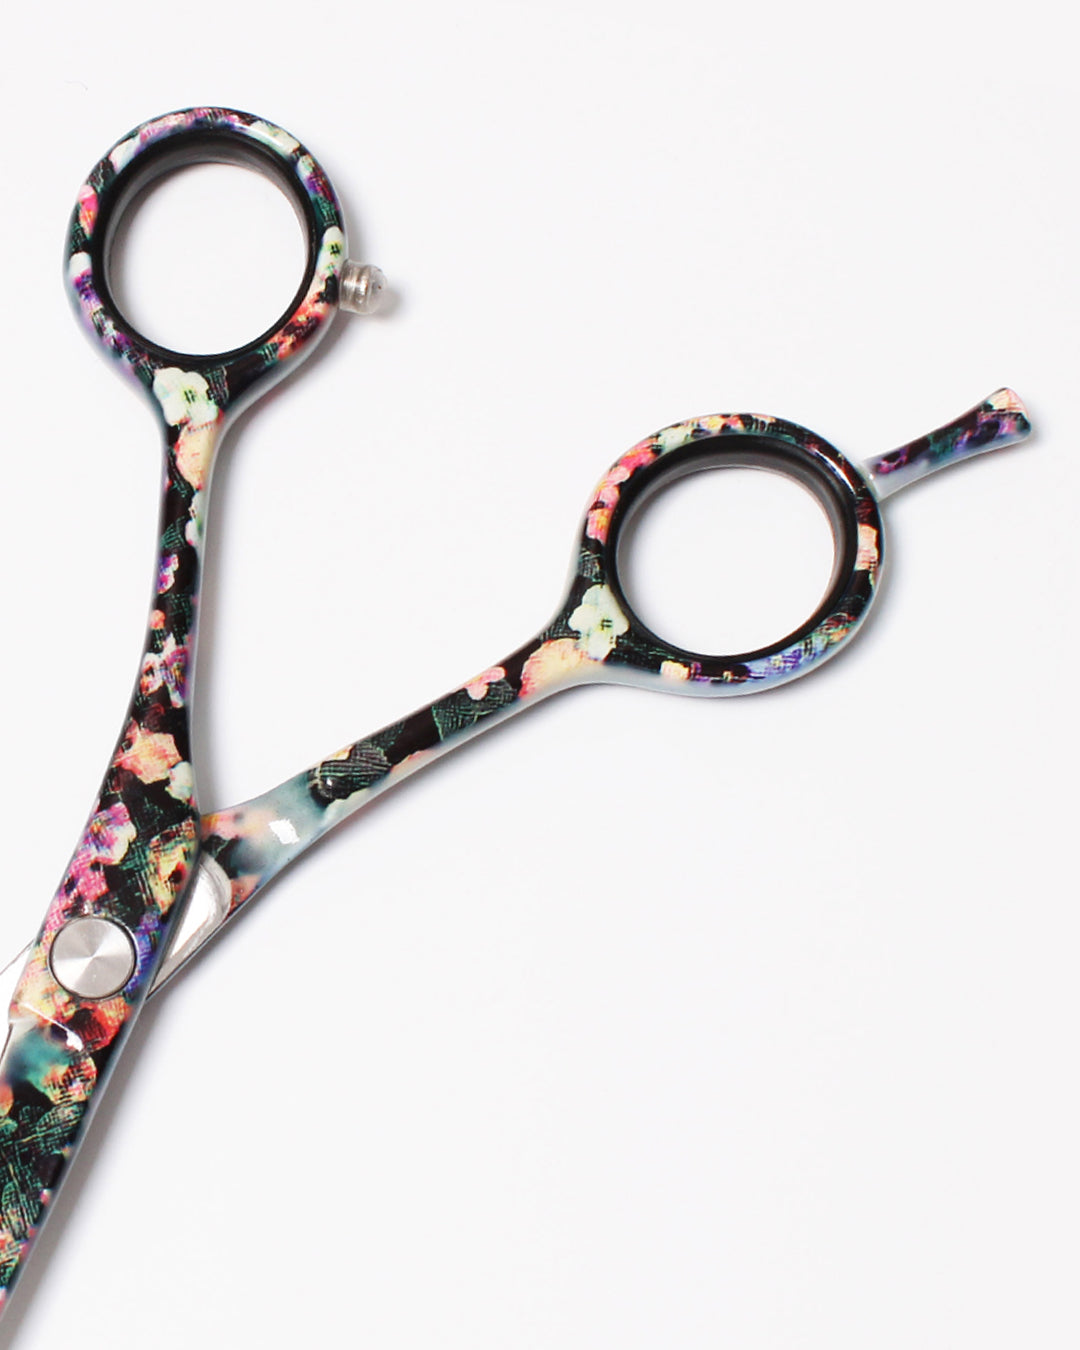 Le Jardin - Hair Trimming Scissors